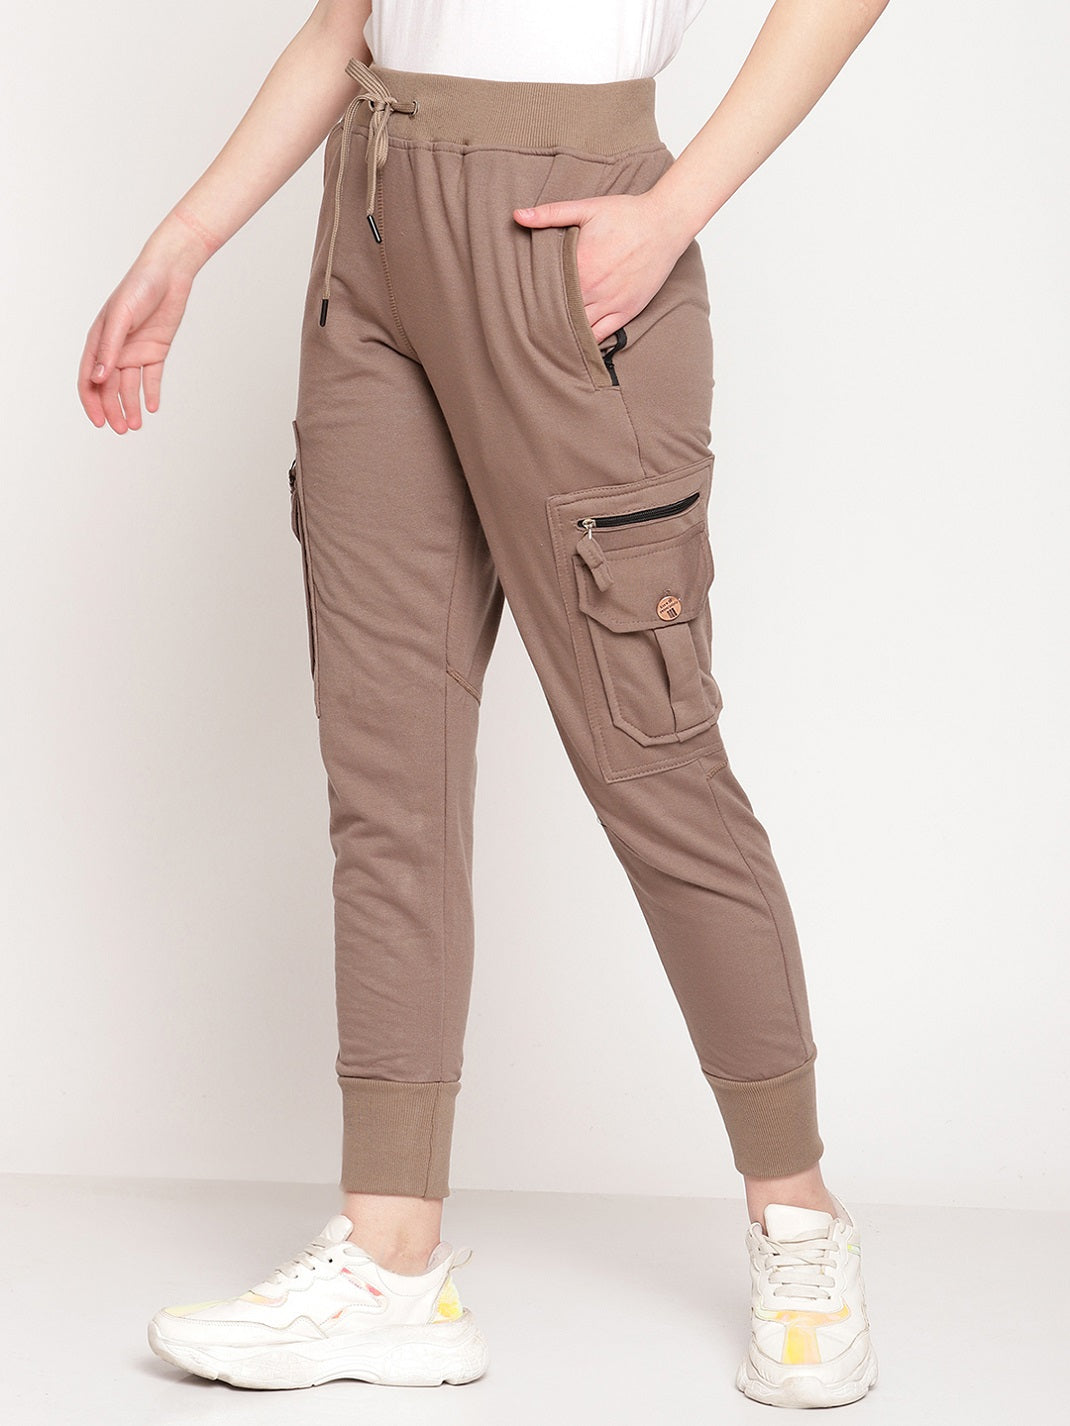 COTTON ON Women's Woven Cargo Pants - Macy's